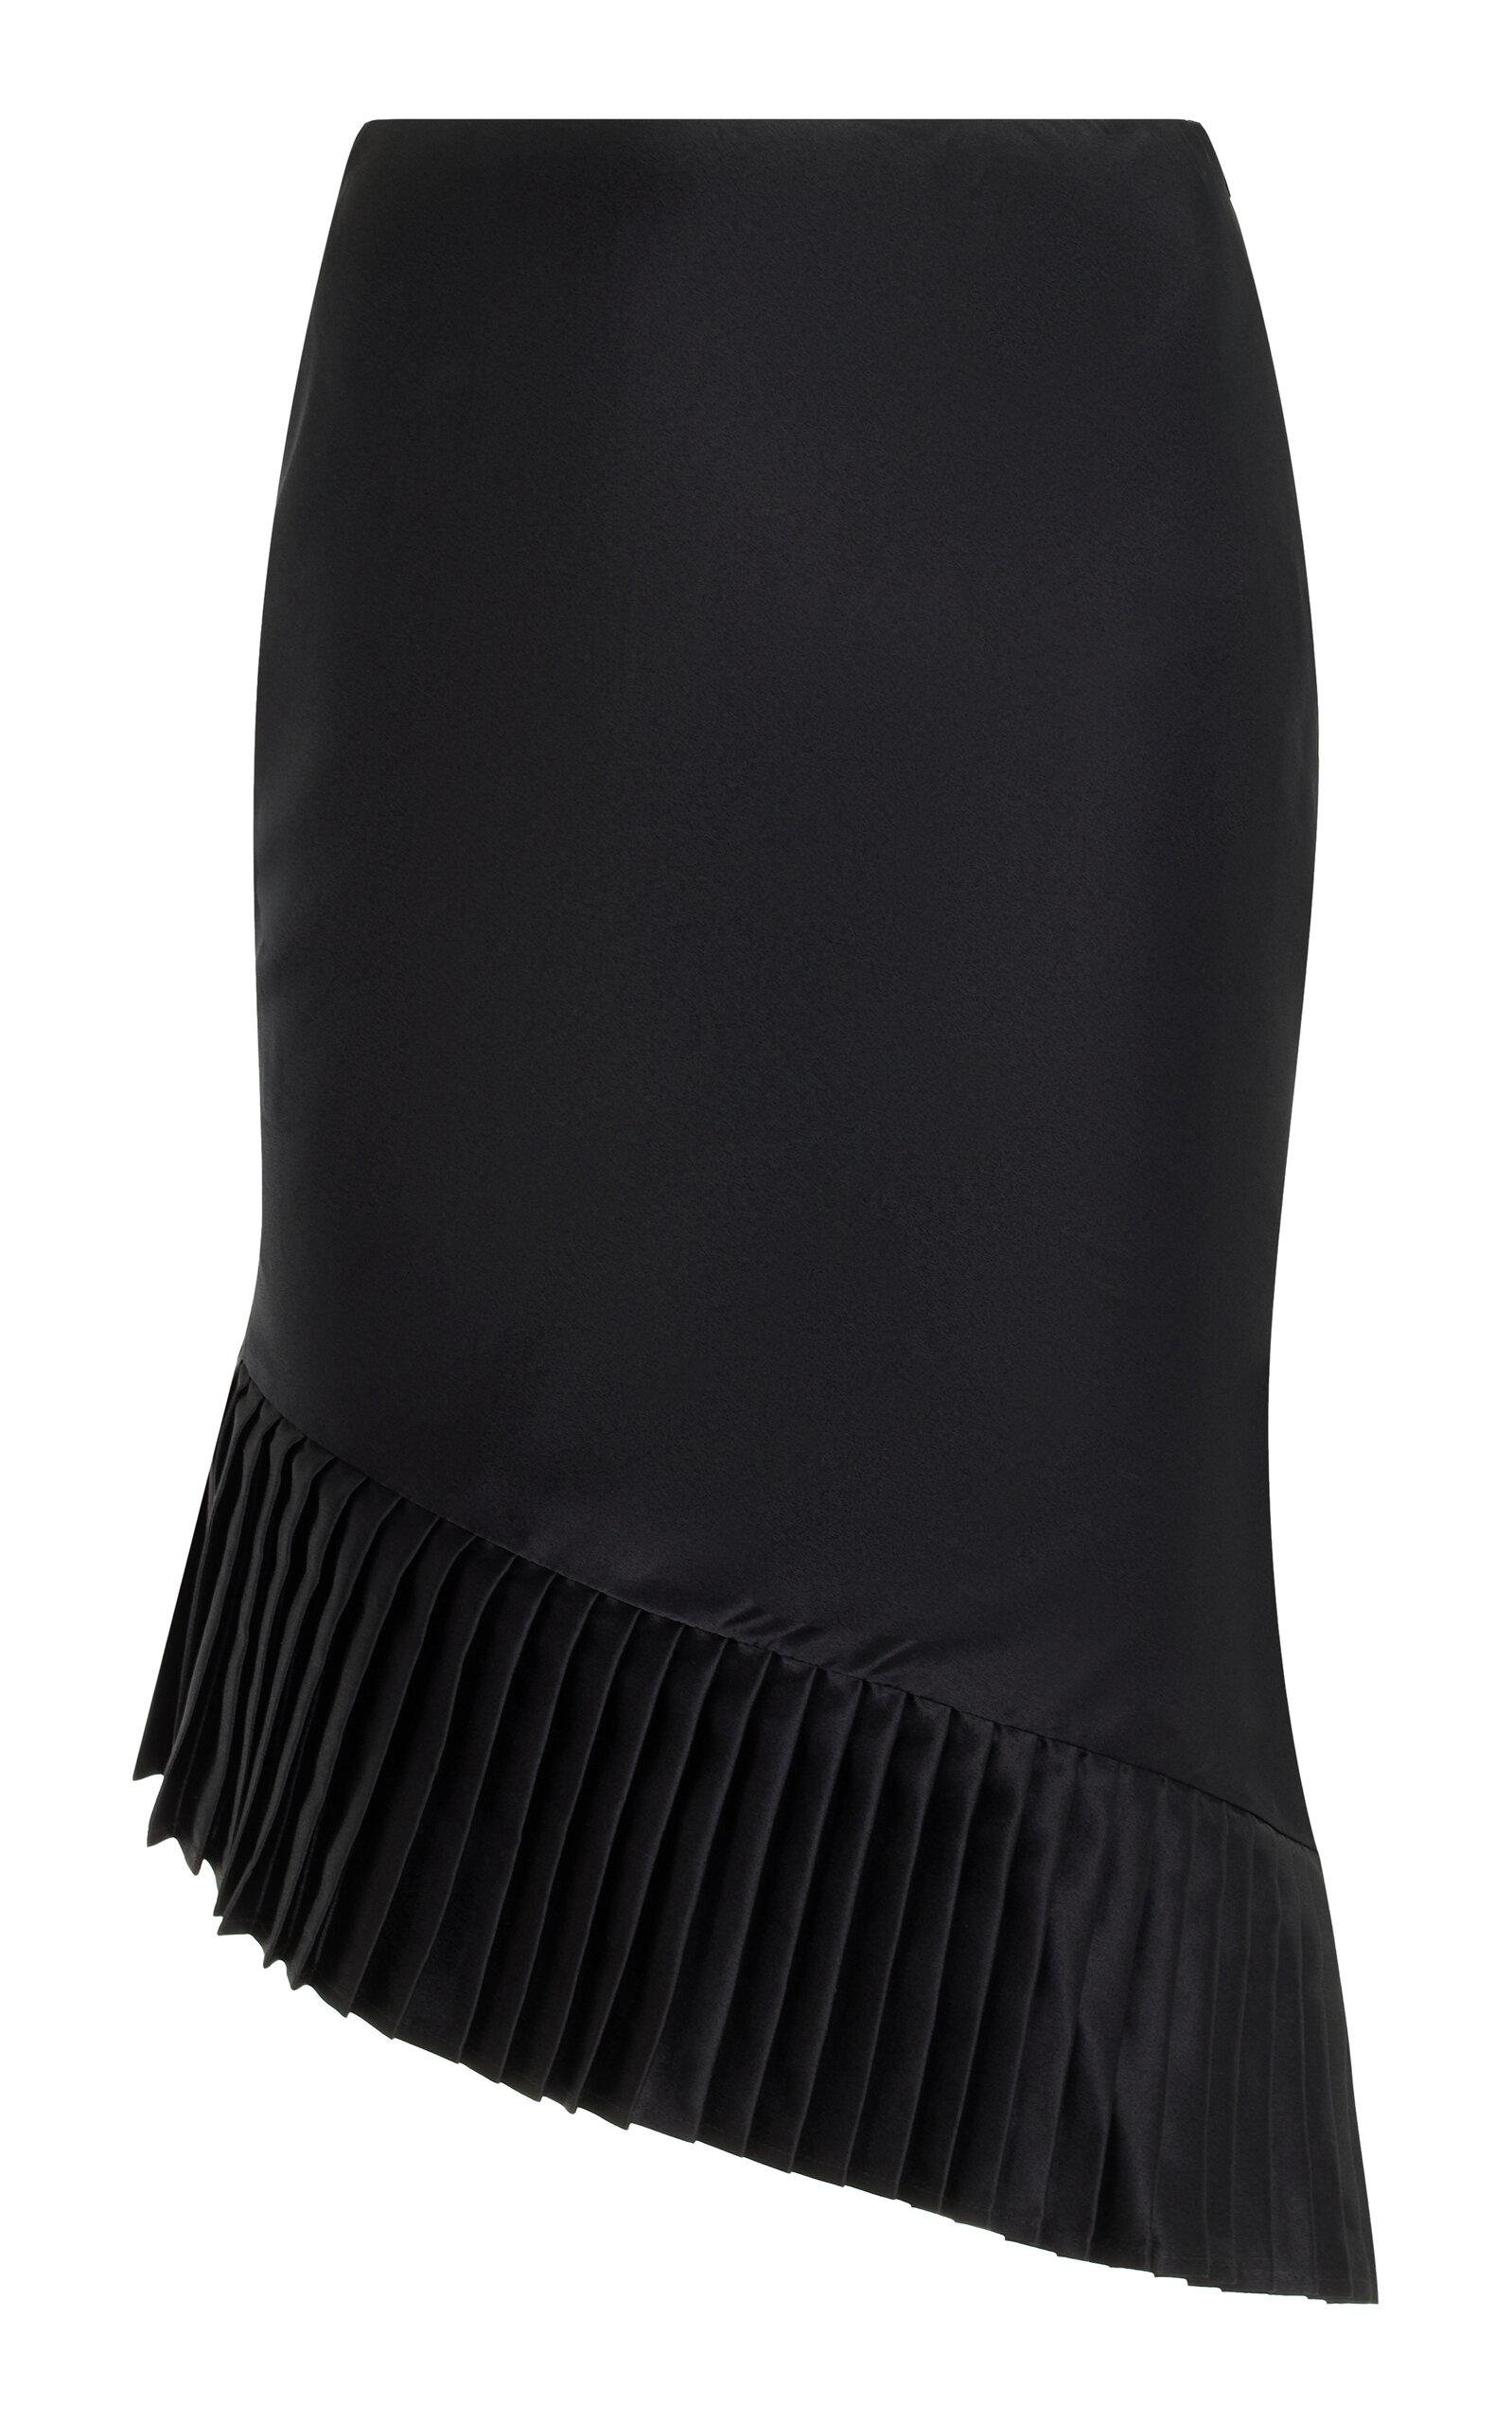 FAIT PAR FOUTCH - Annabelle Hand-Pleated Silk Charmeuse Midi Skirt - Black - XXS - Only At Moda Operandi by FAIT PAR FOUTCH